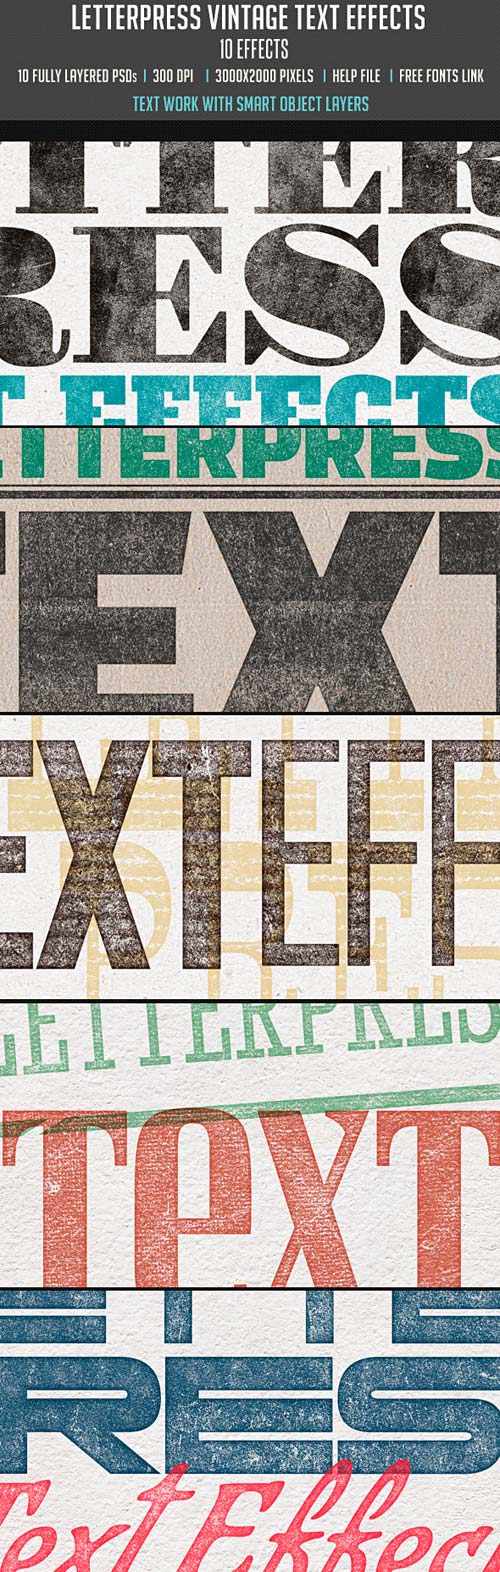 GraphicRiver Letterpress Vintage Text Effects